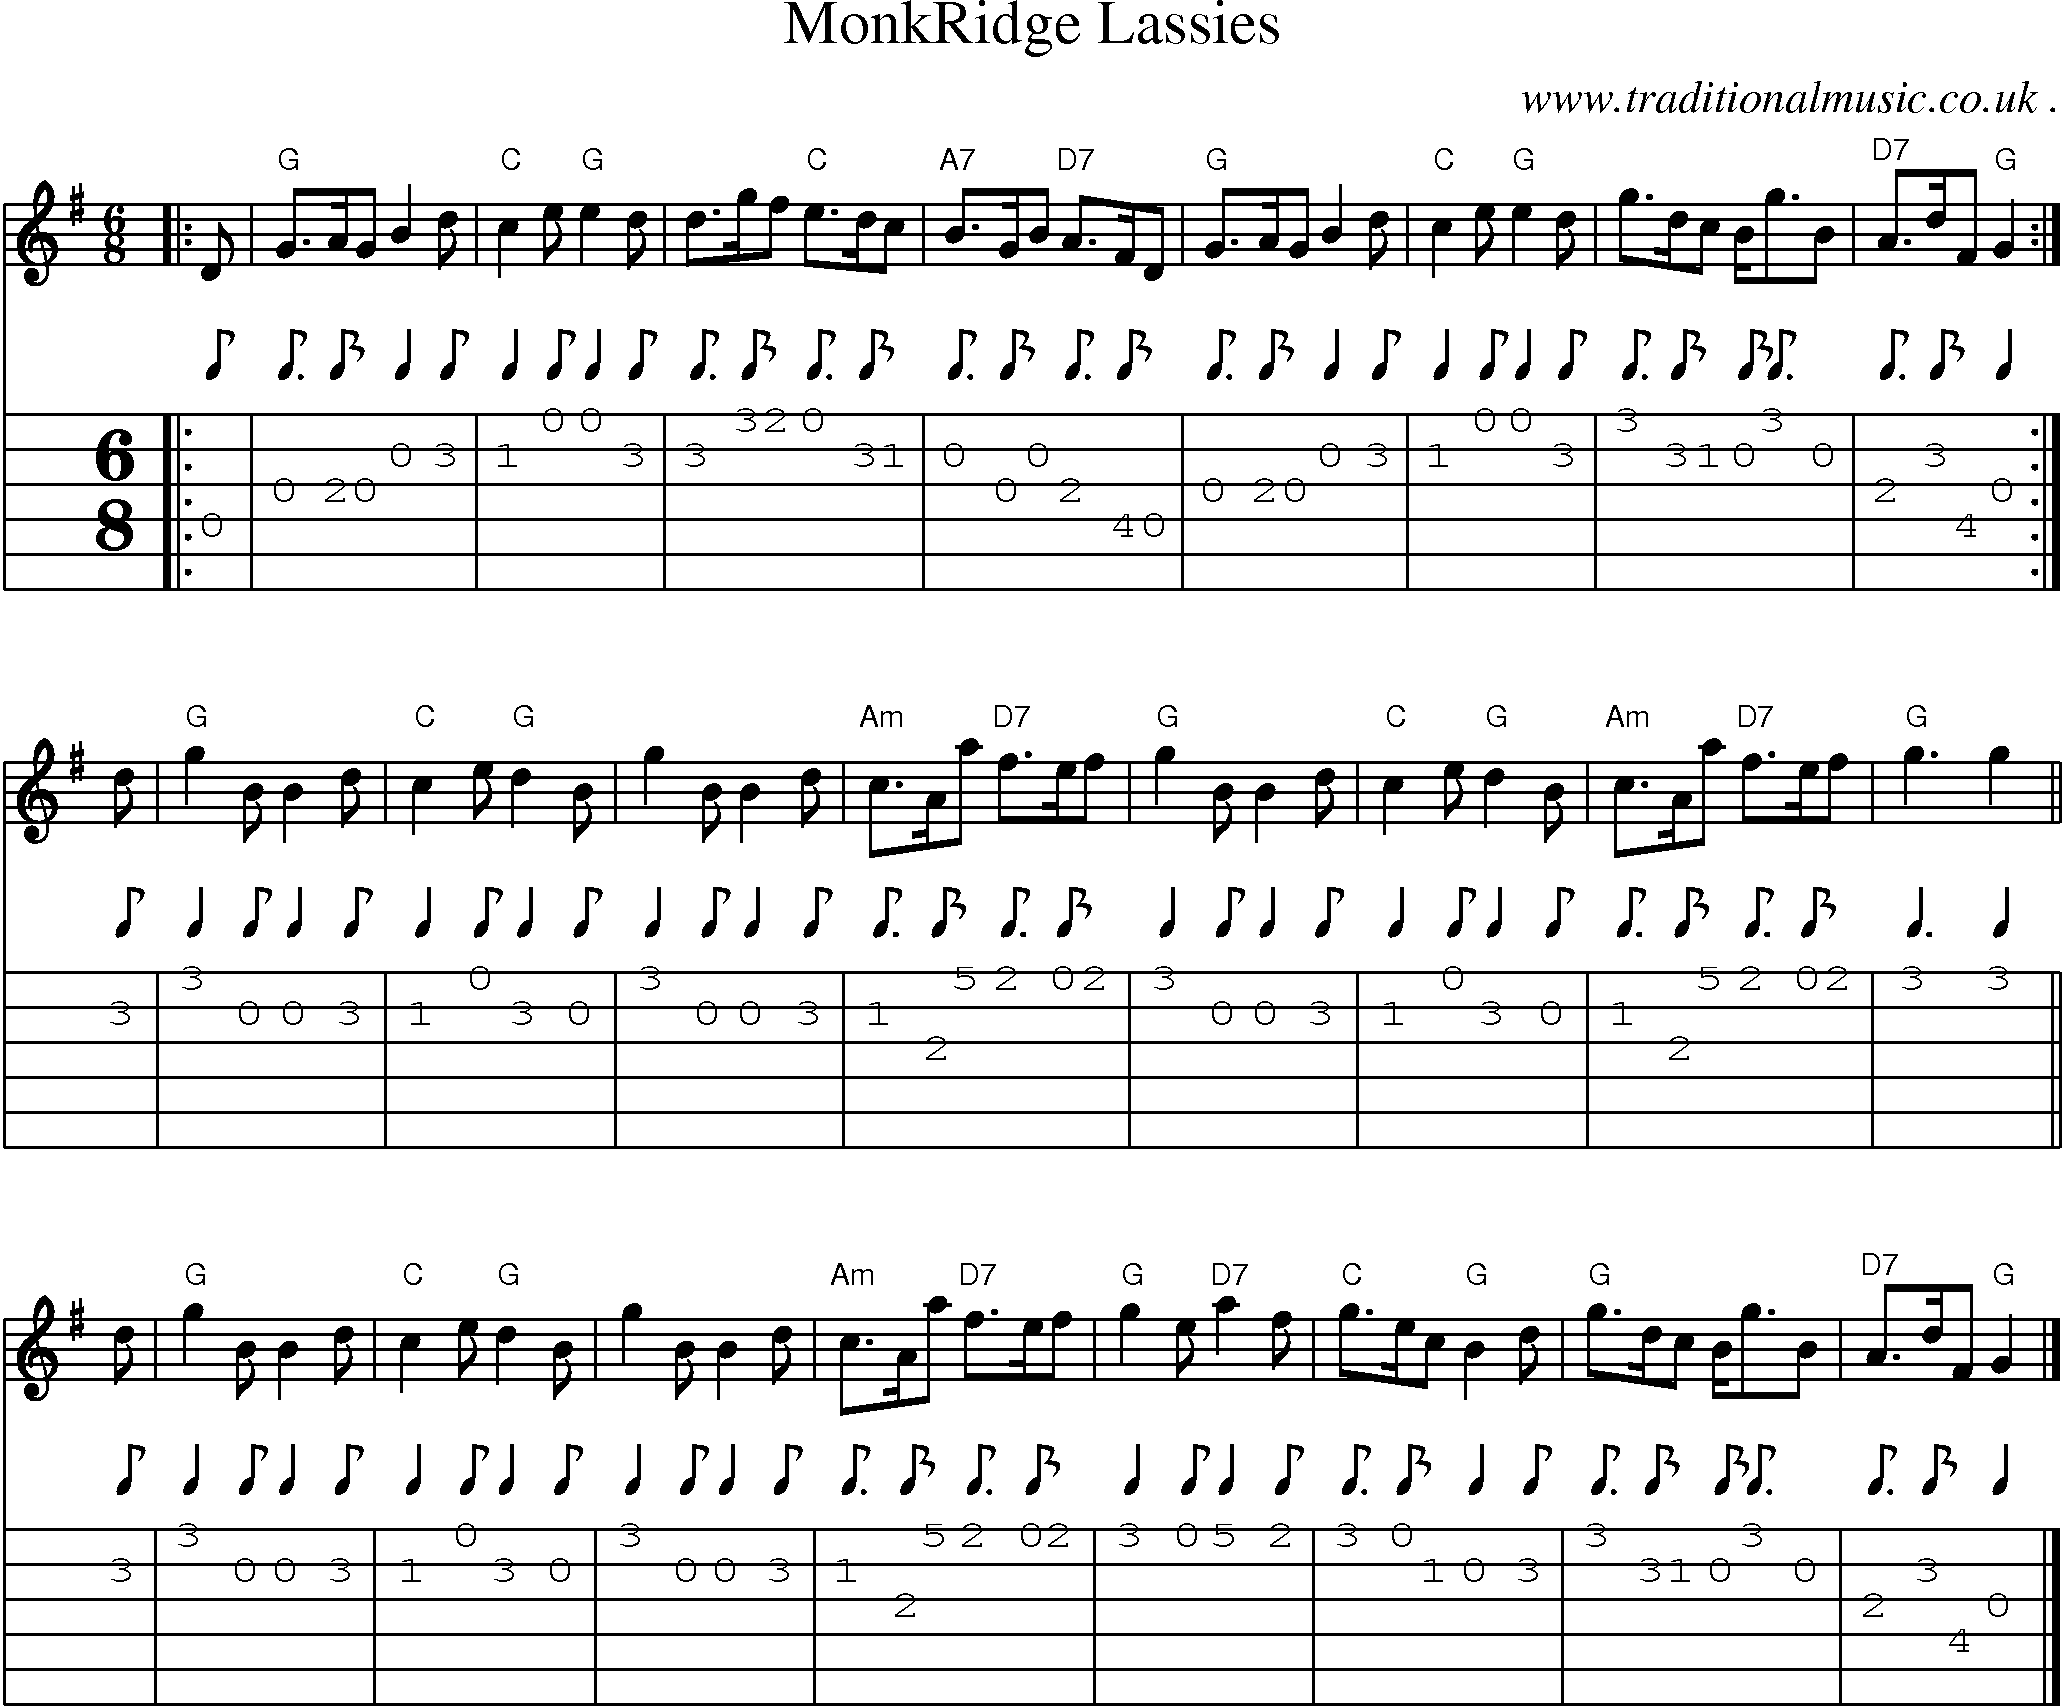 Sheet-music  score, Chords and Guitar Tabs for Monkridge Lassies